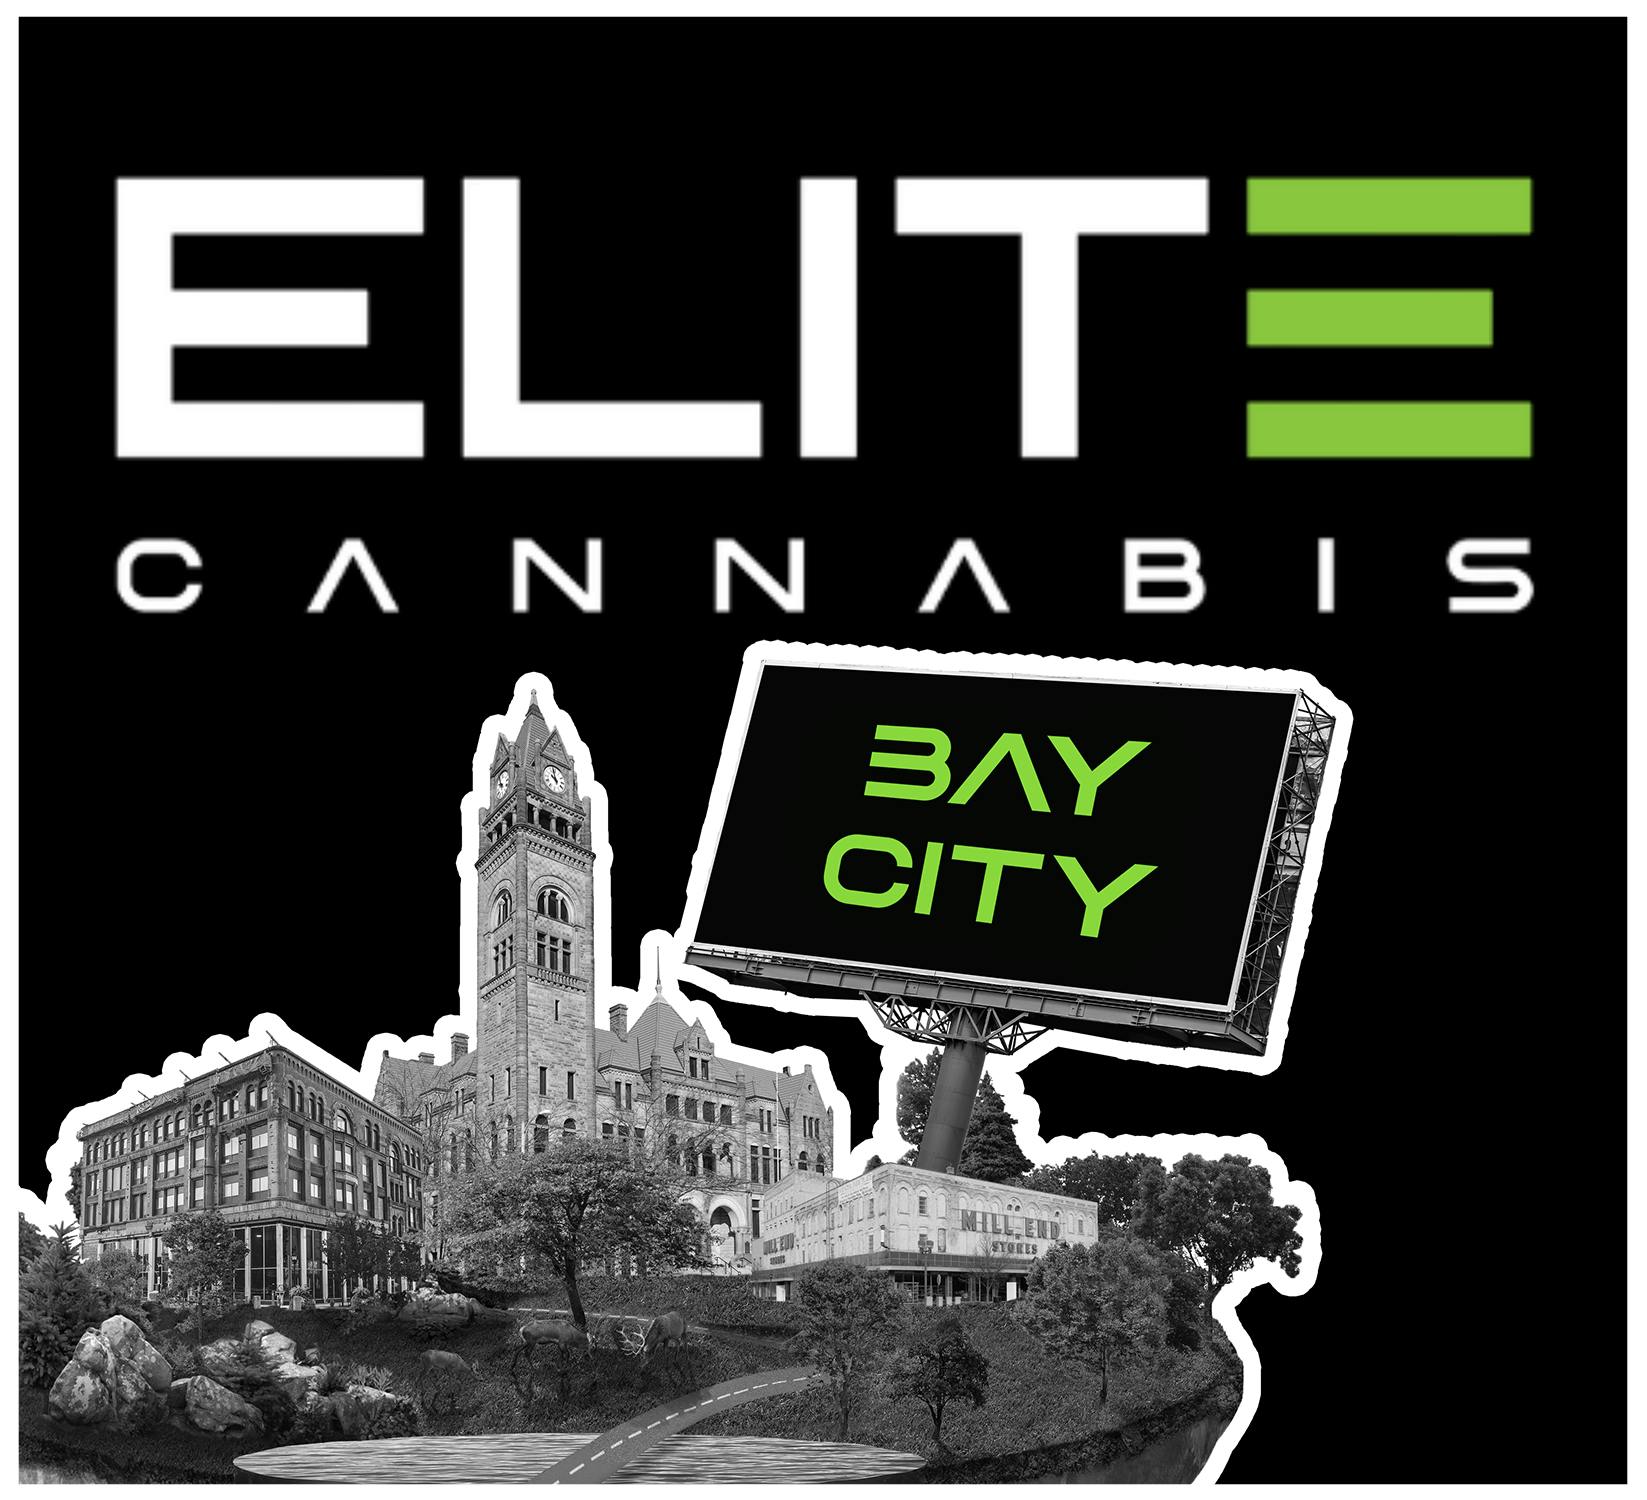 Elite Cannabis logo